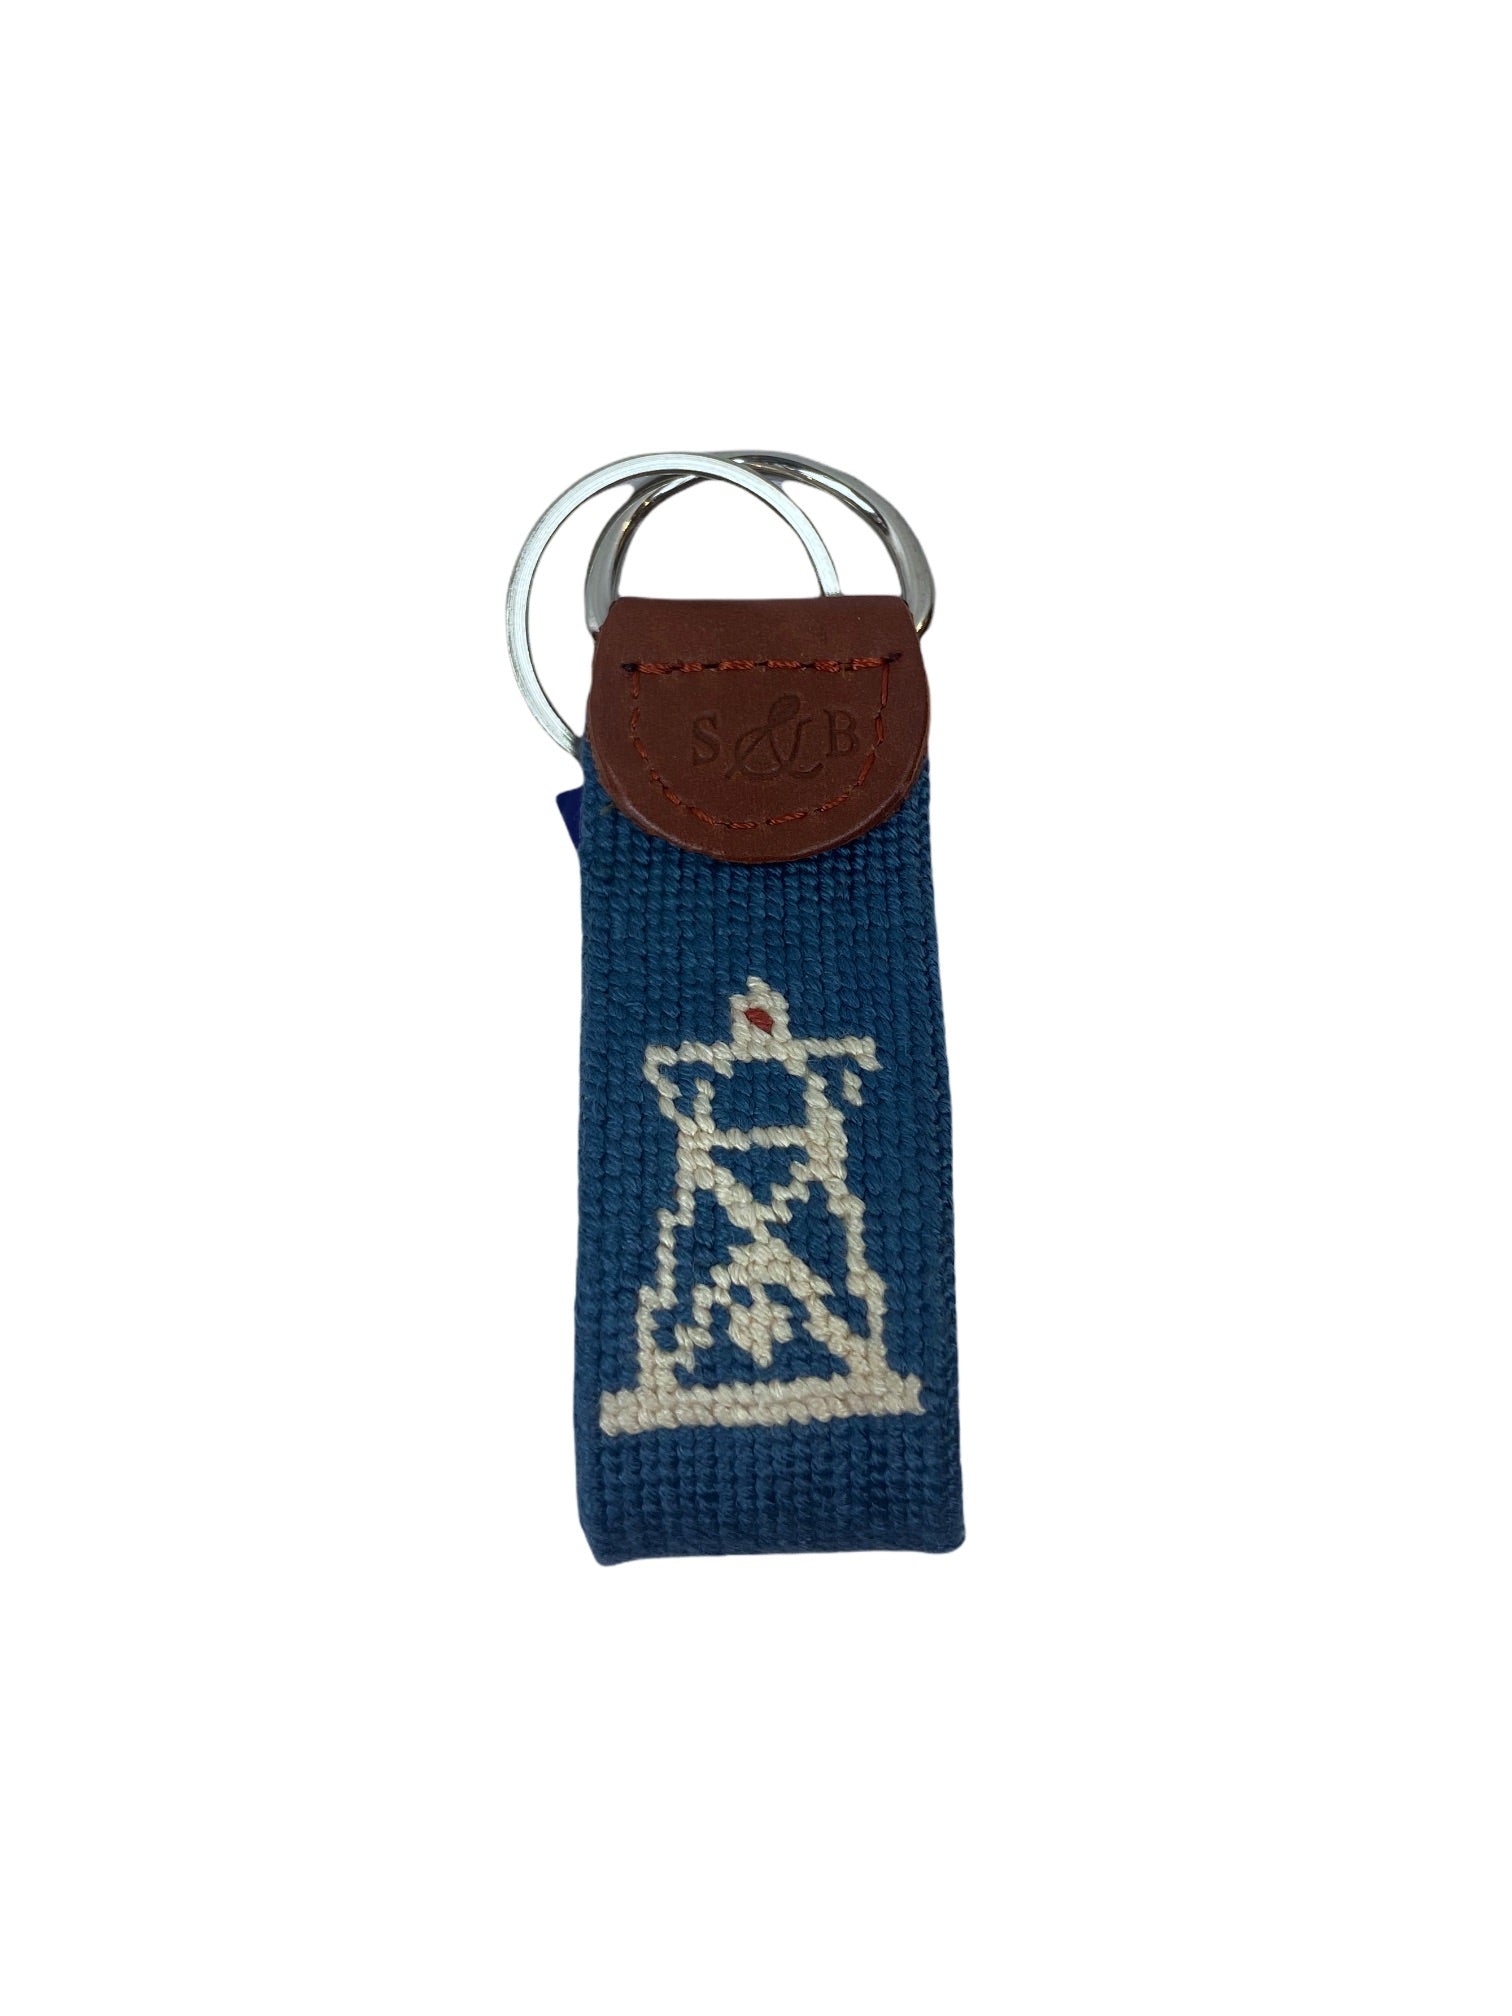 Needlepoint Buoy Keychain - Slate